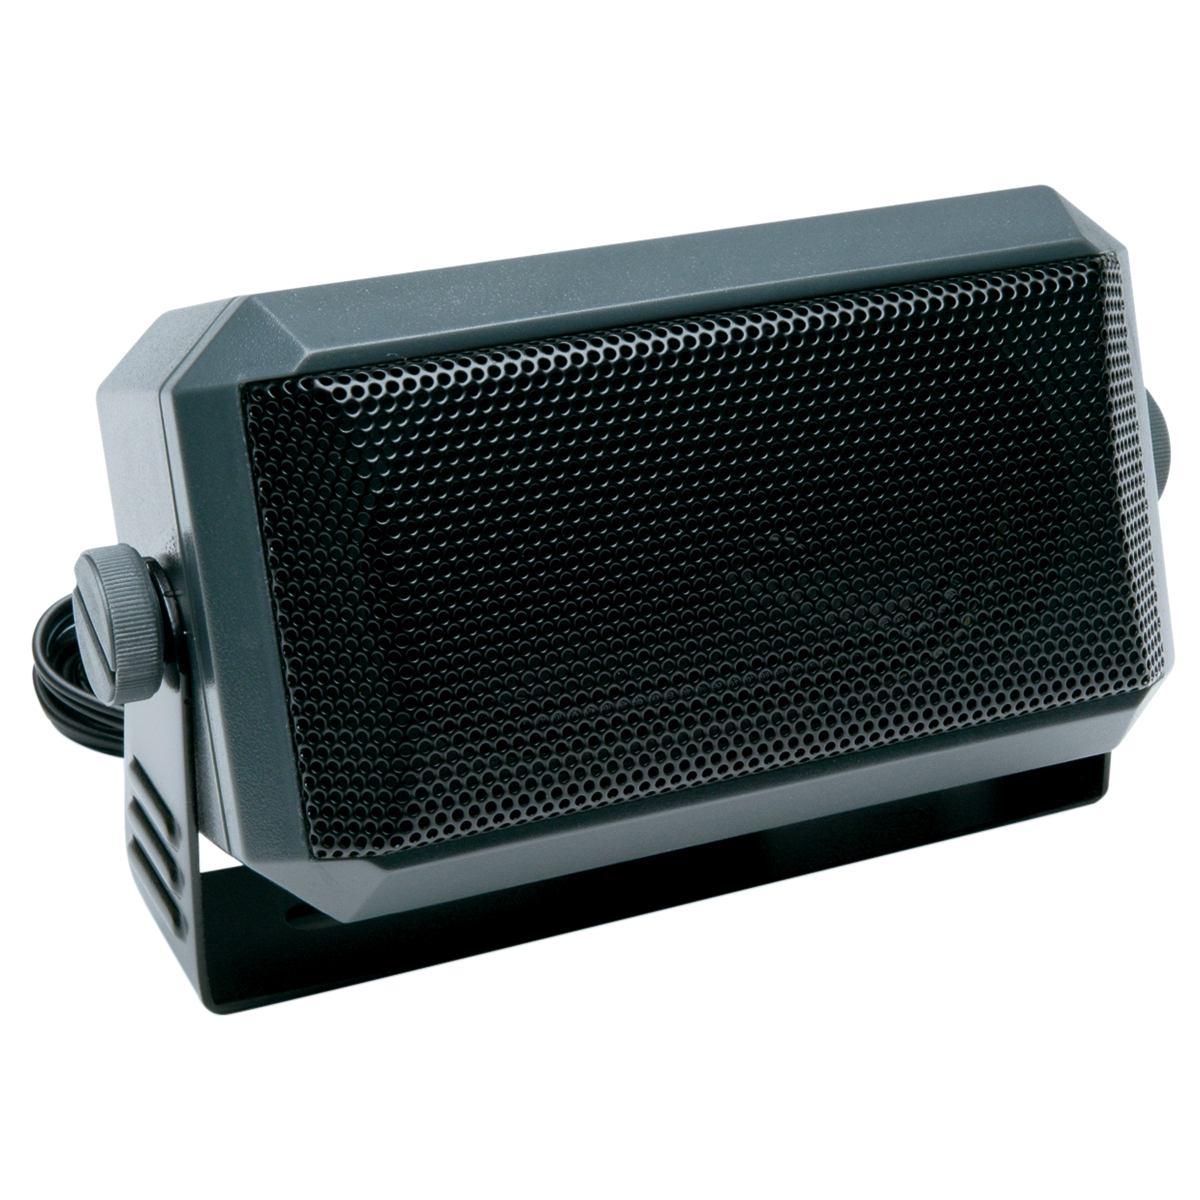 TruckSpec CB External Speaker TSSP-15 Compact Universal Fit for Ham Radio CB Scanners Black